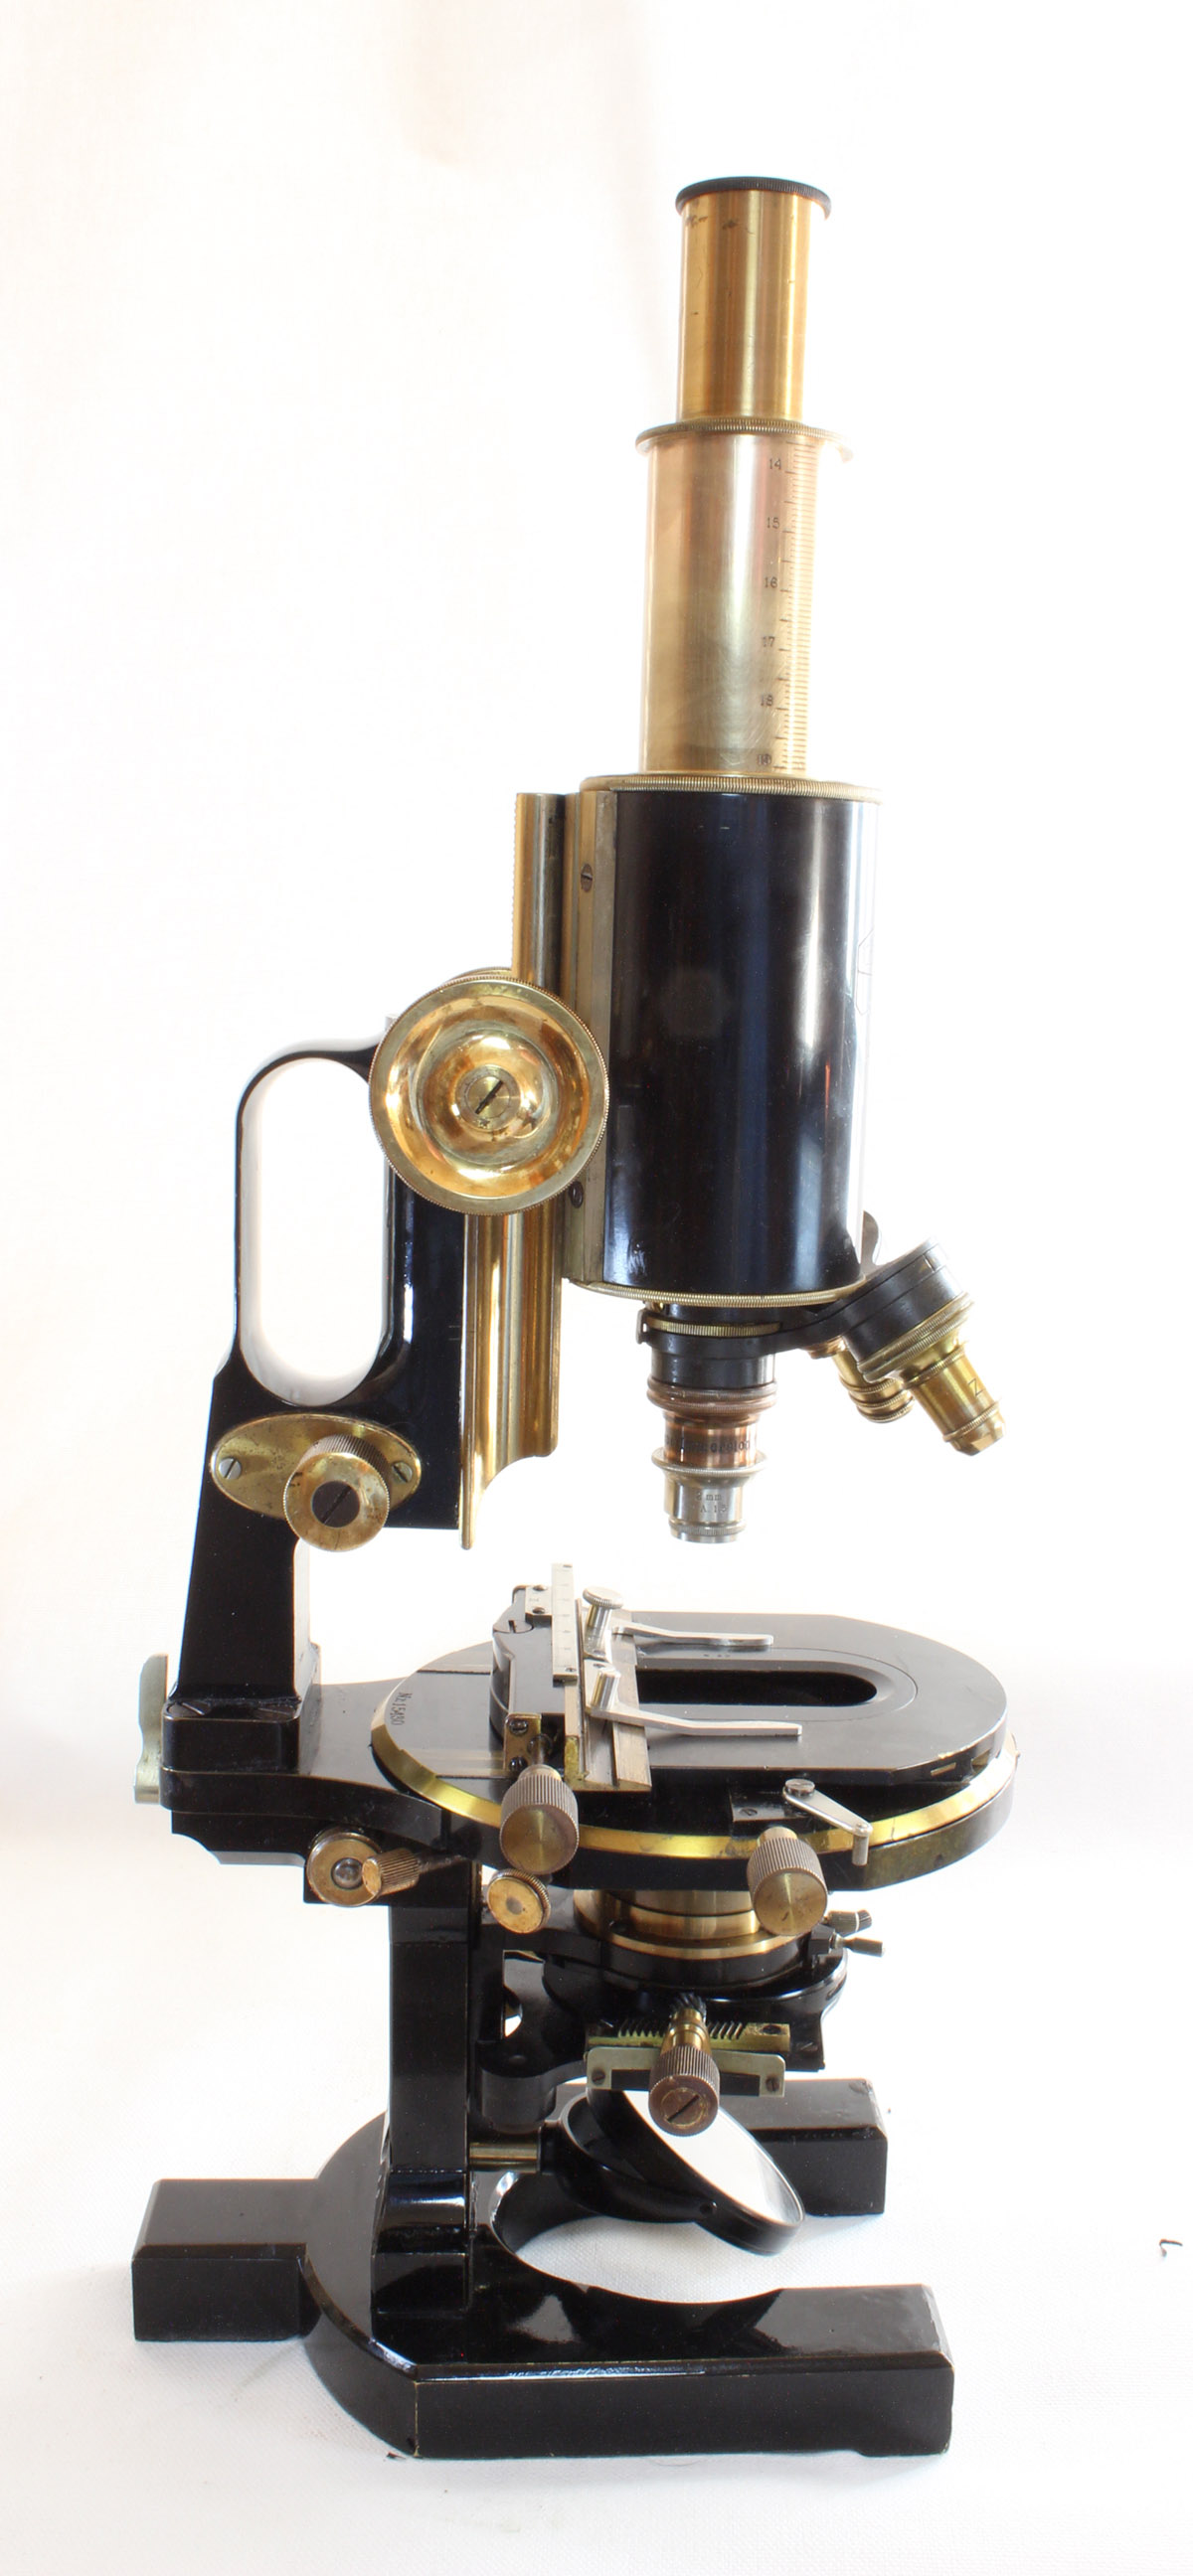 zeiss microscope models